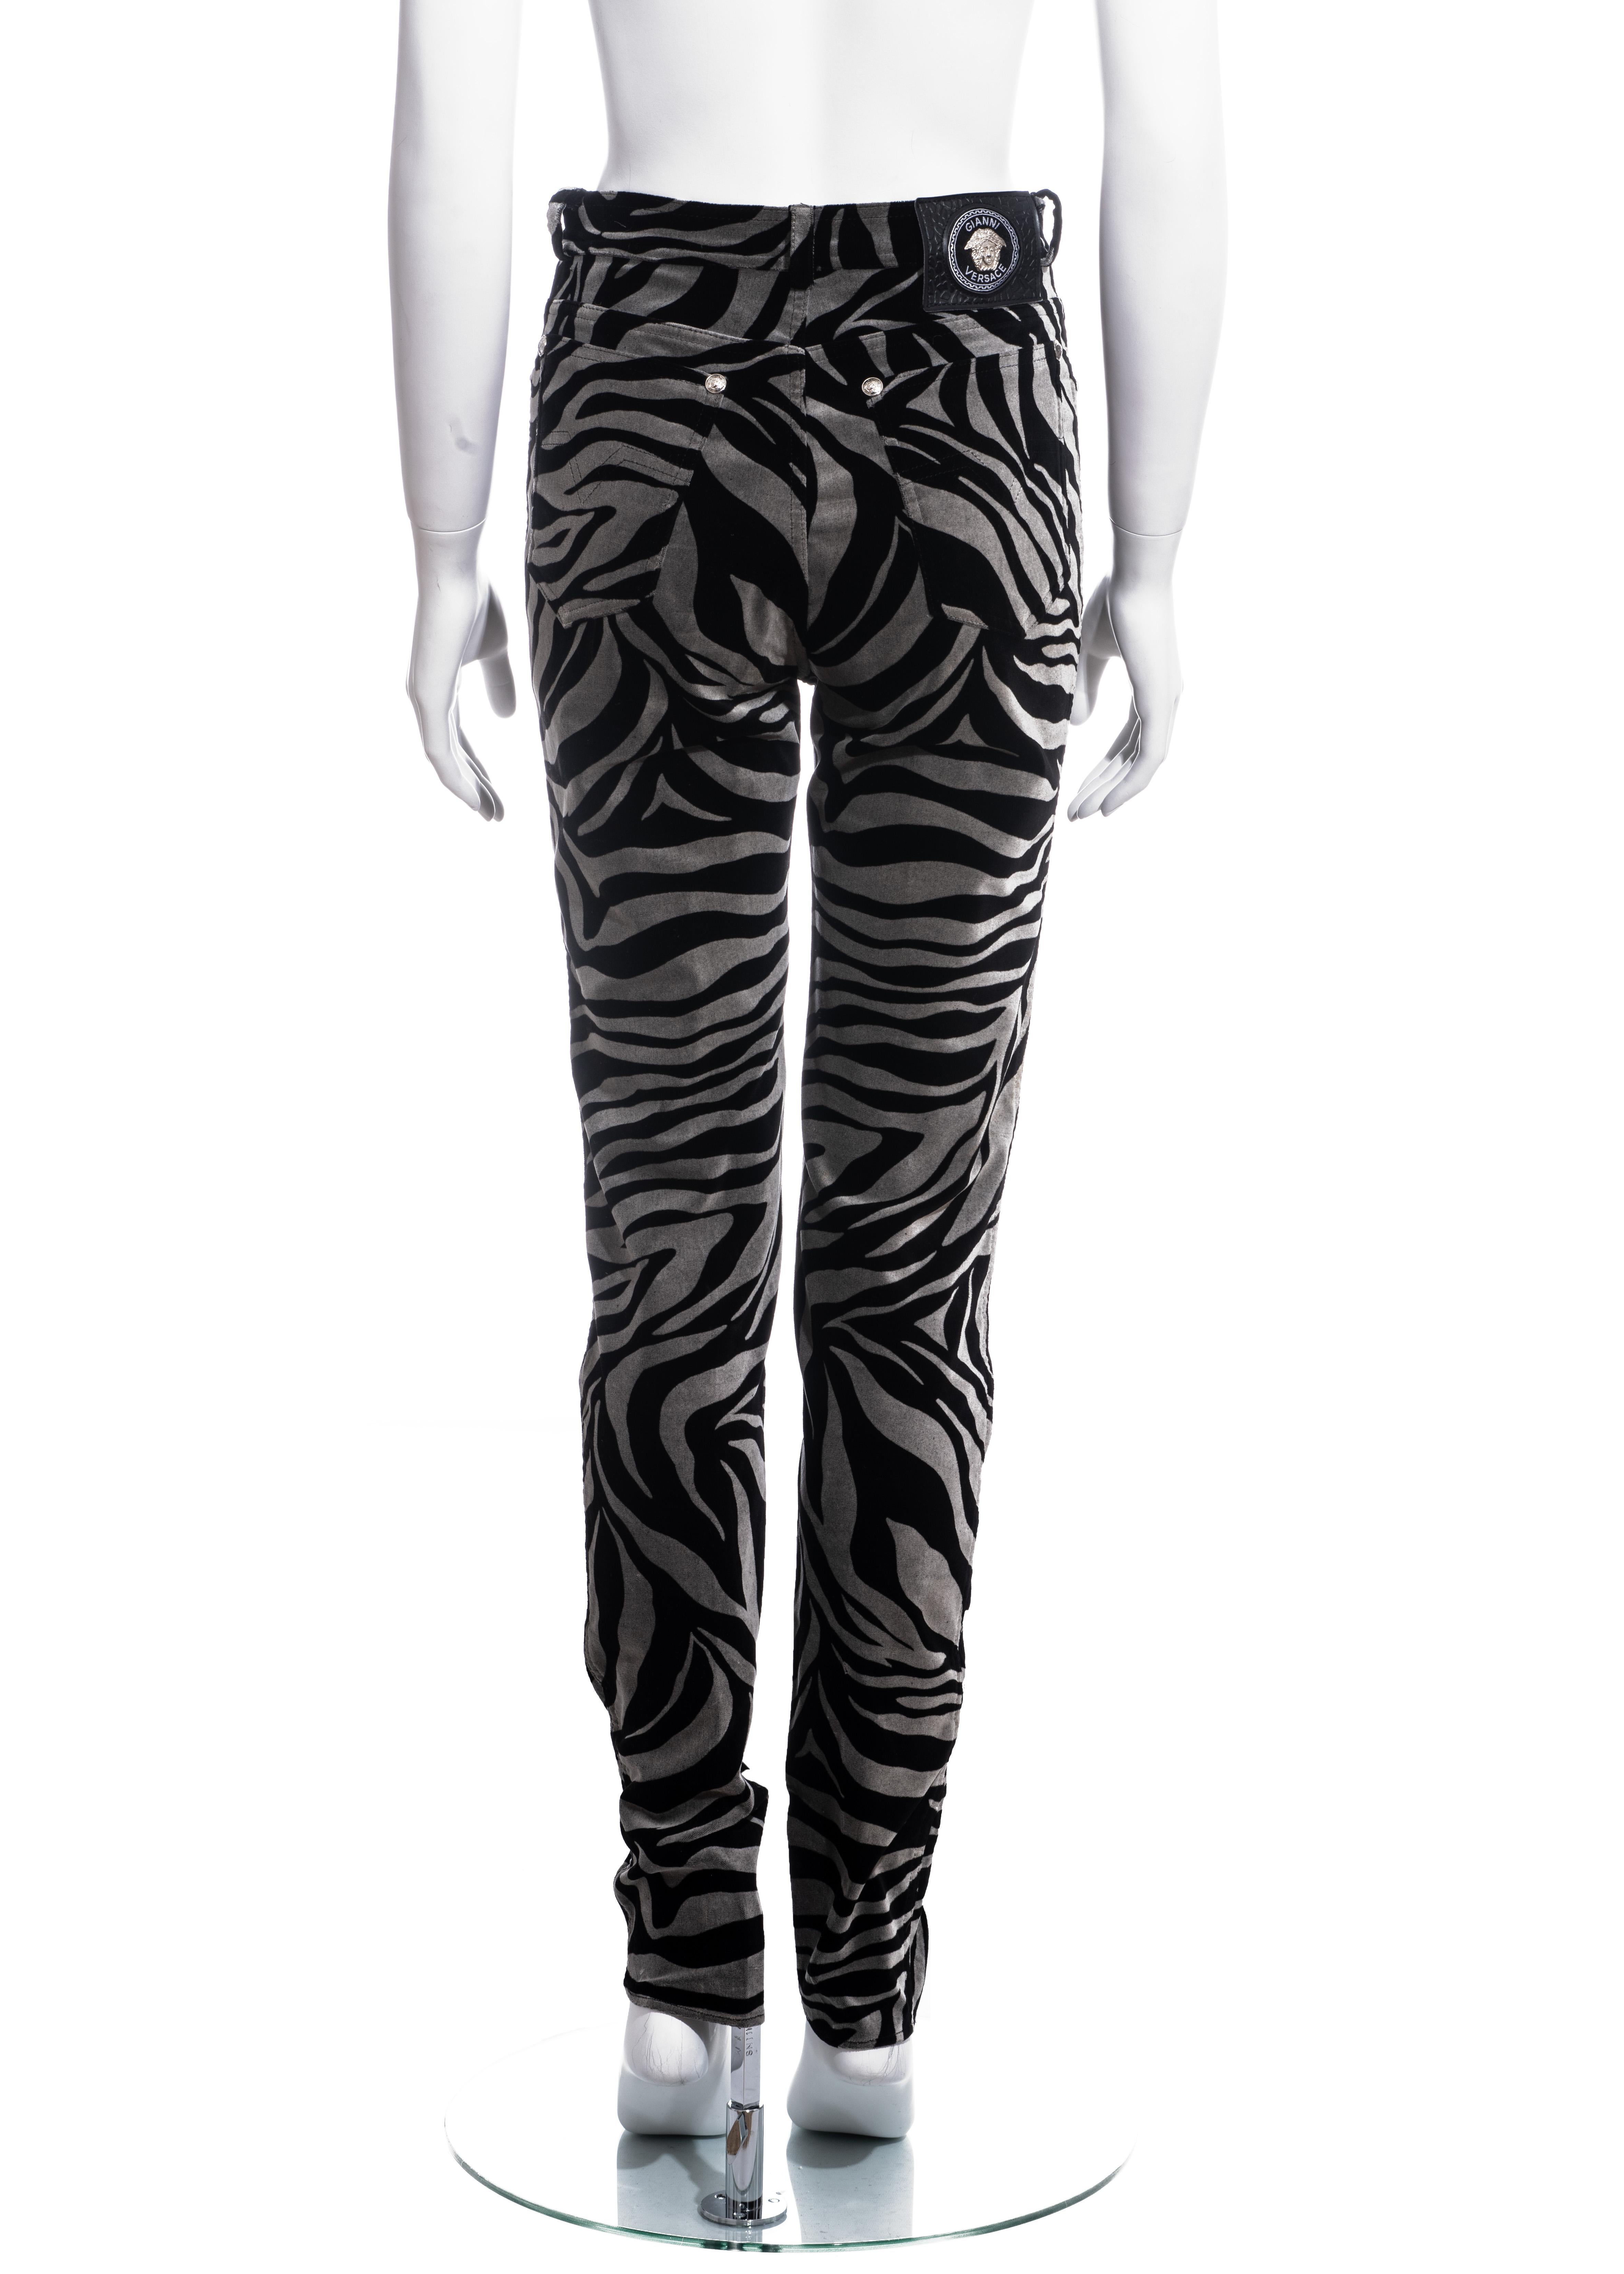 Women's Gianni Versace black and grey velvet zebra print pants, ss 1992